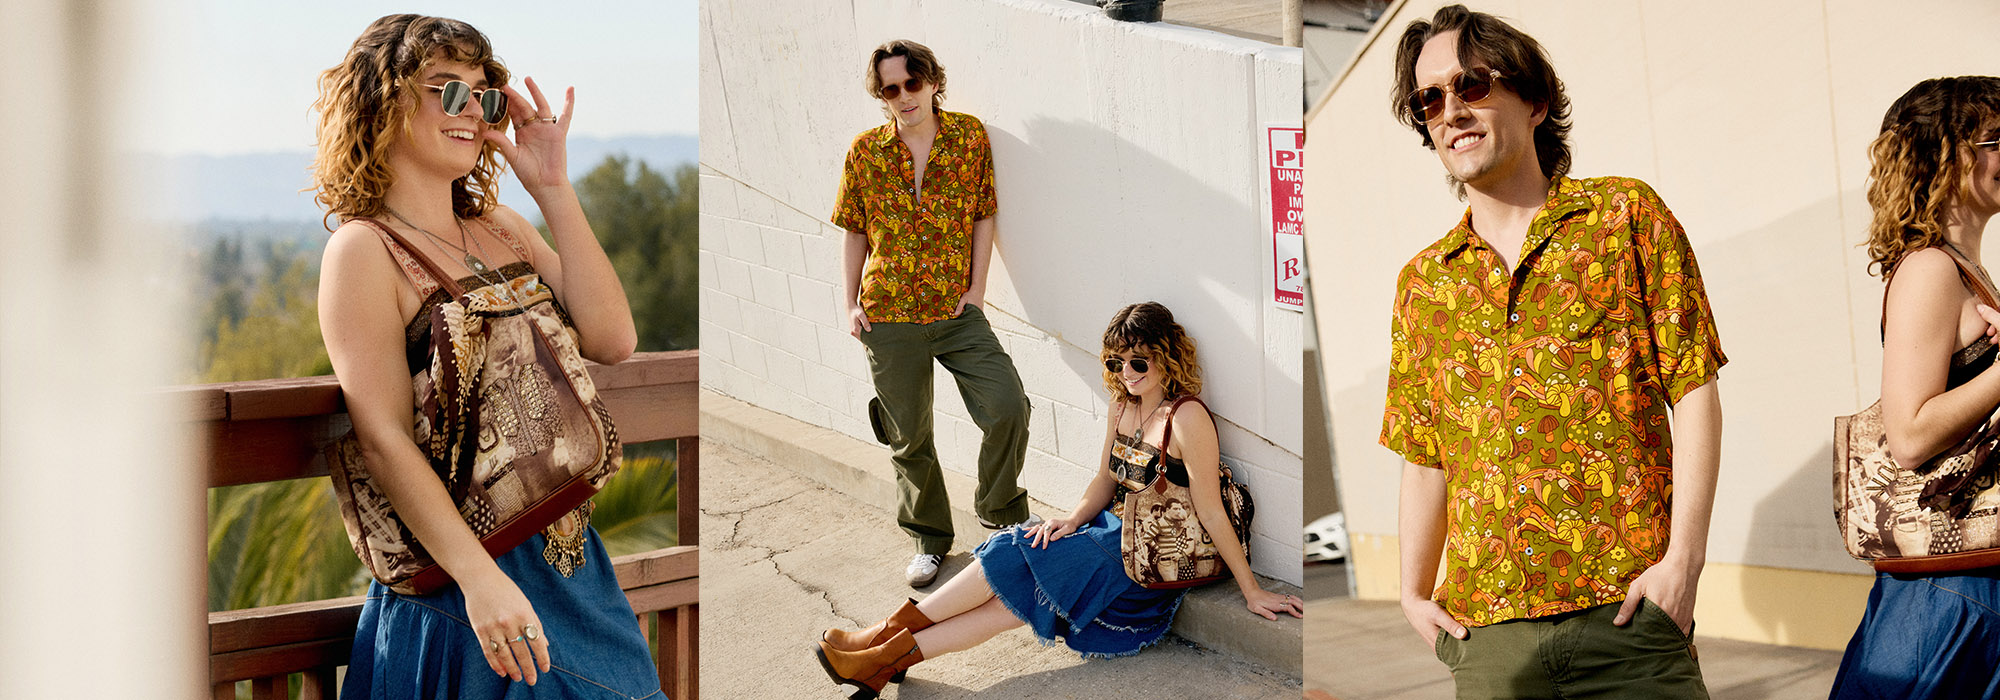 Sara and Eric wearing summer fashion posing in urban areas.